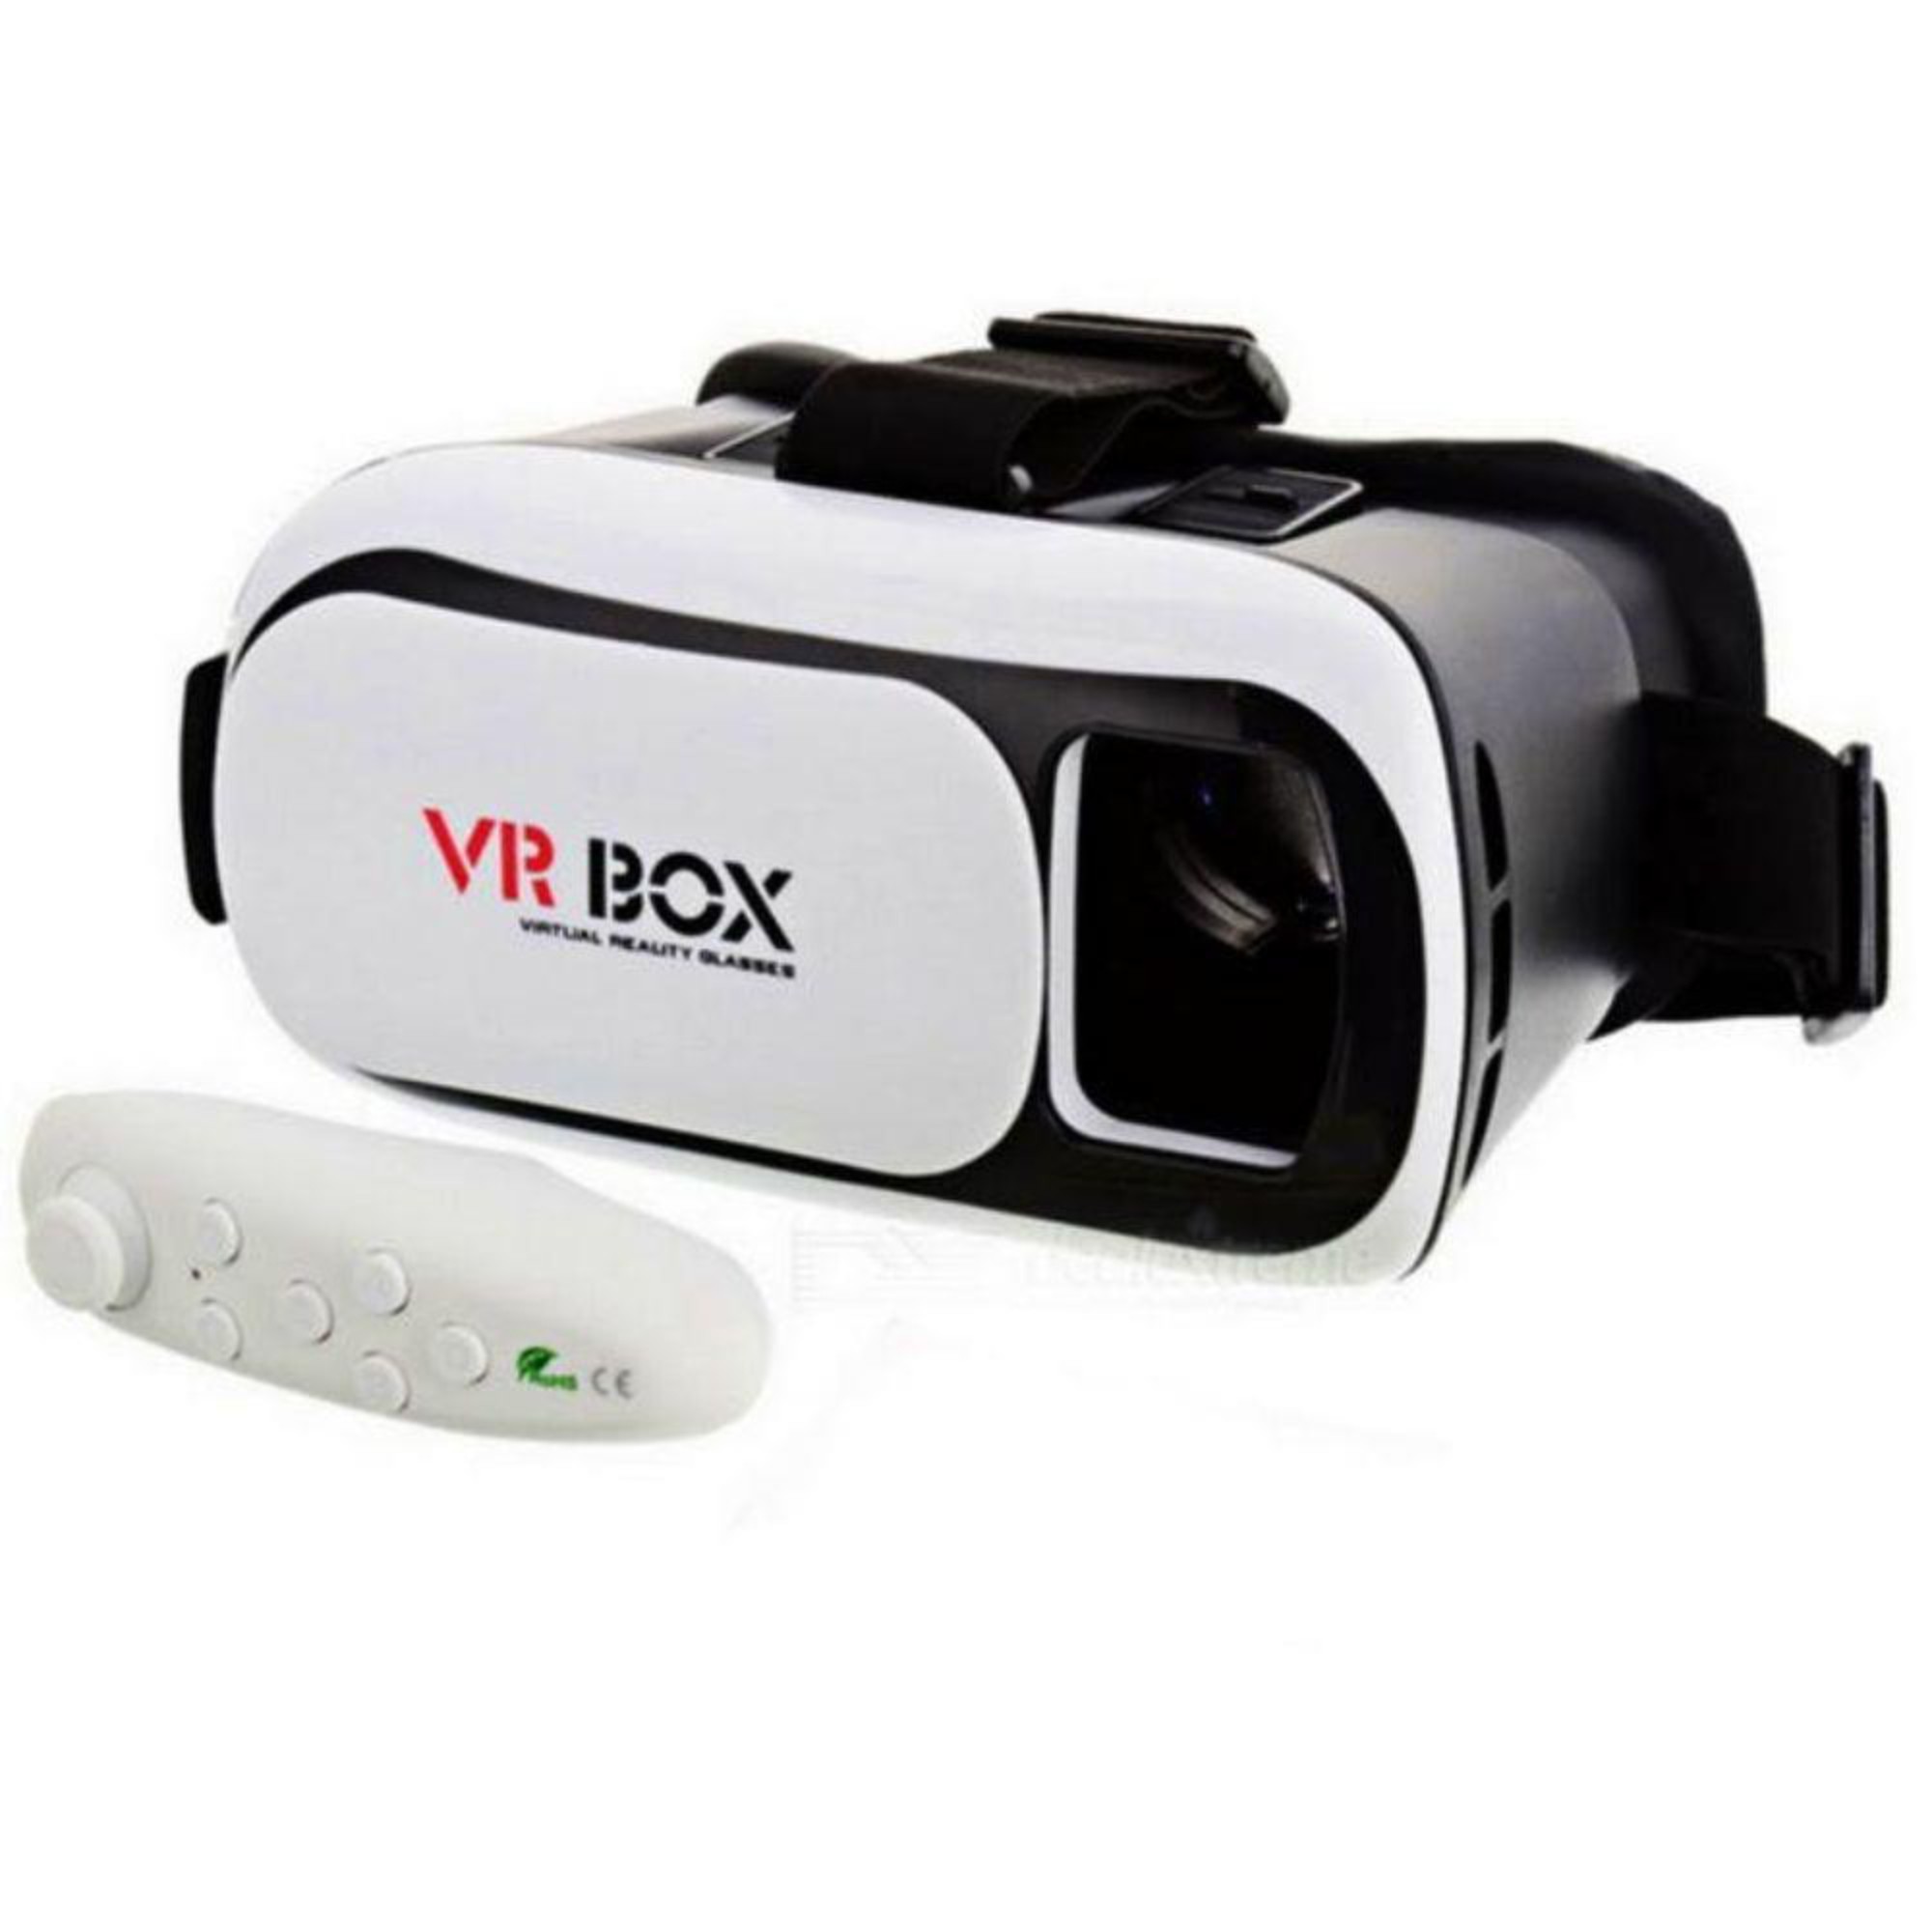 Óculos VR Box 2.0 Premium Realidade Virtual 3D